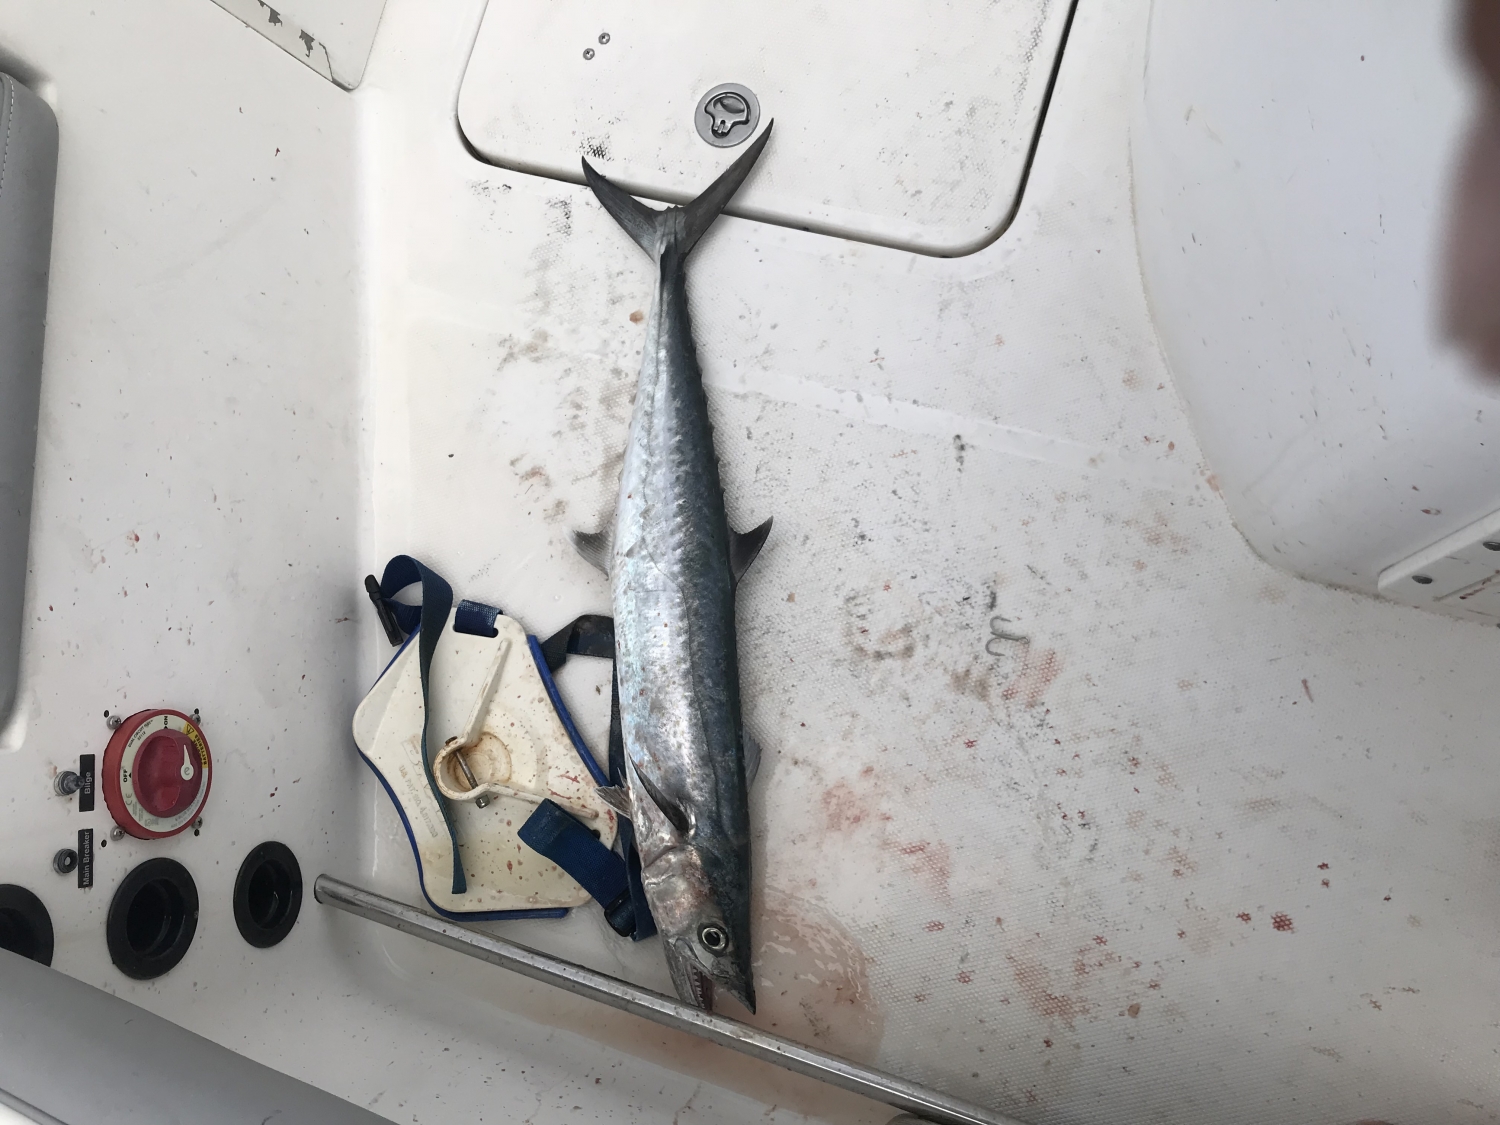 Live Target Spanish Mackerel Lure 6 Inch 20ft Trolling SMK140D933 Fishing for sale online 